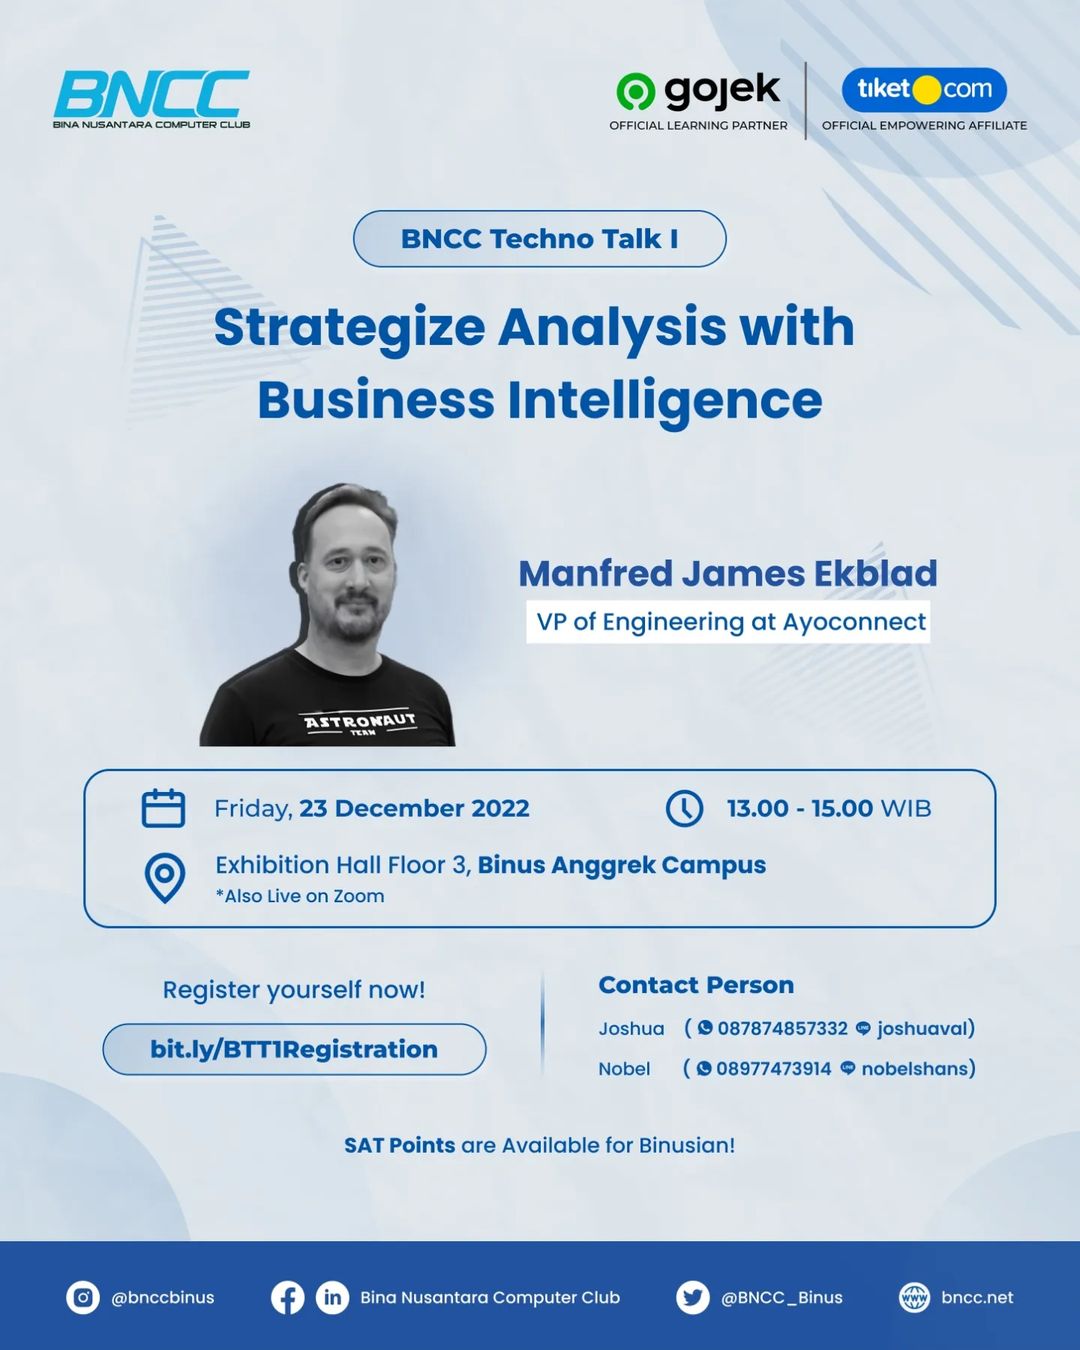 BNCC Techno Talk I: Strategize Analysis with Business Intelligence